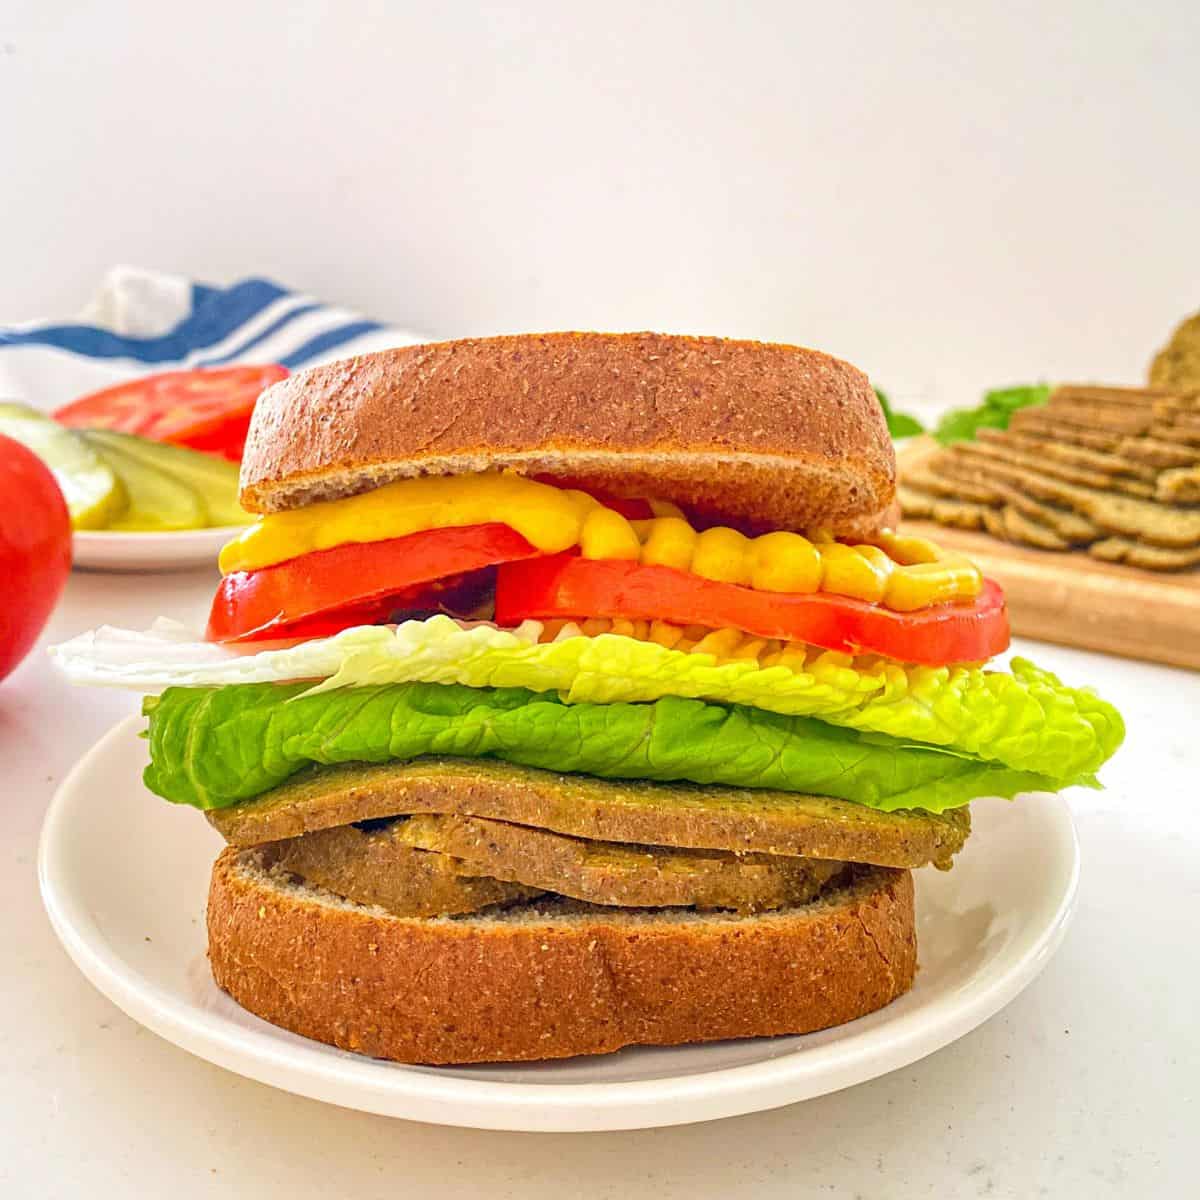 Sandwich with vegan deli meat, lettuce, tomato, and mustard.